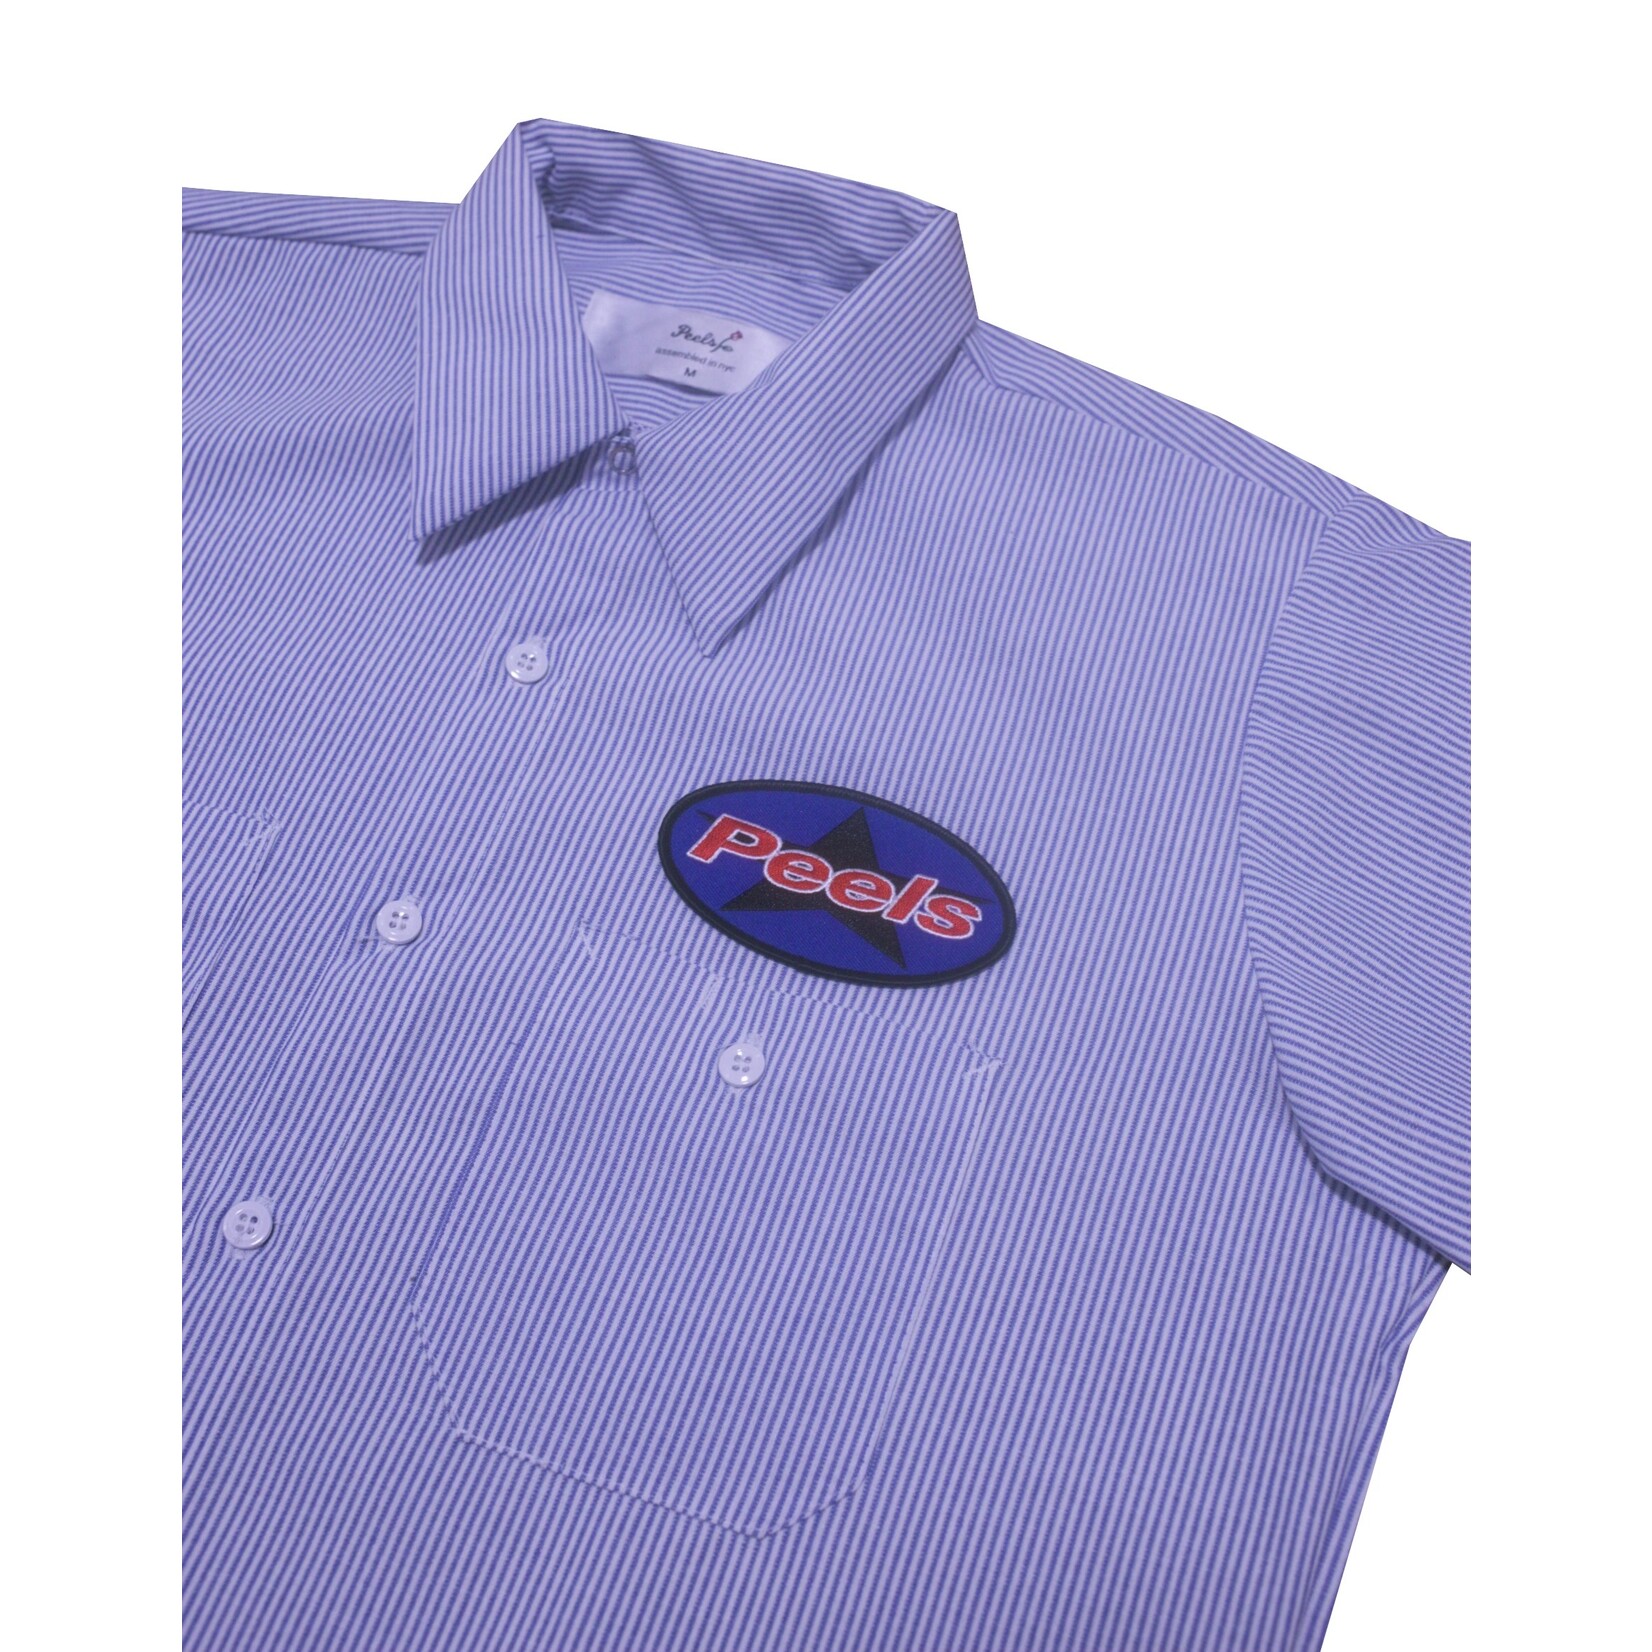 Peels NYC Peels Light Blue Striped Work Shirt W/Star Patch